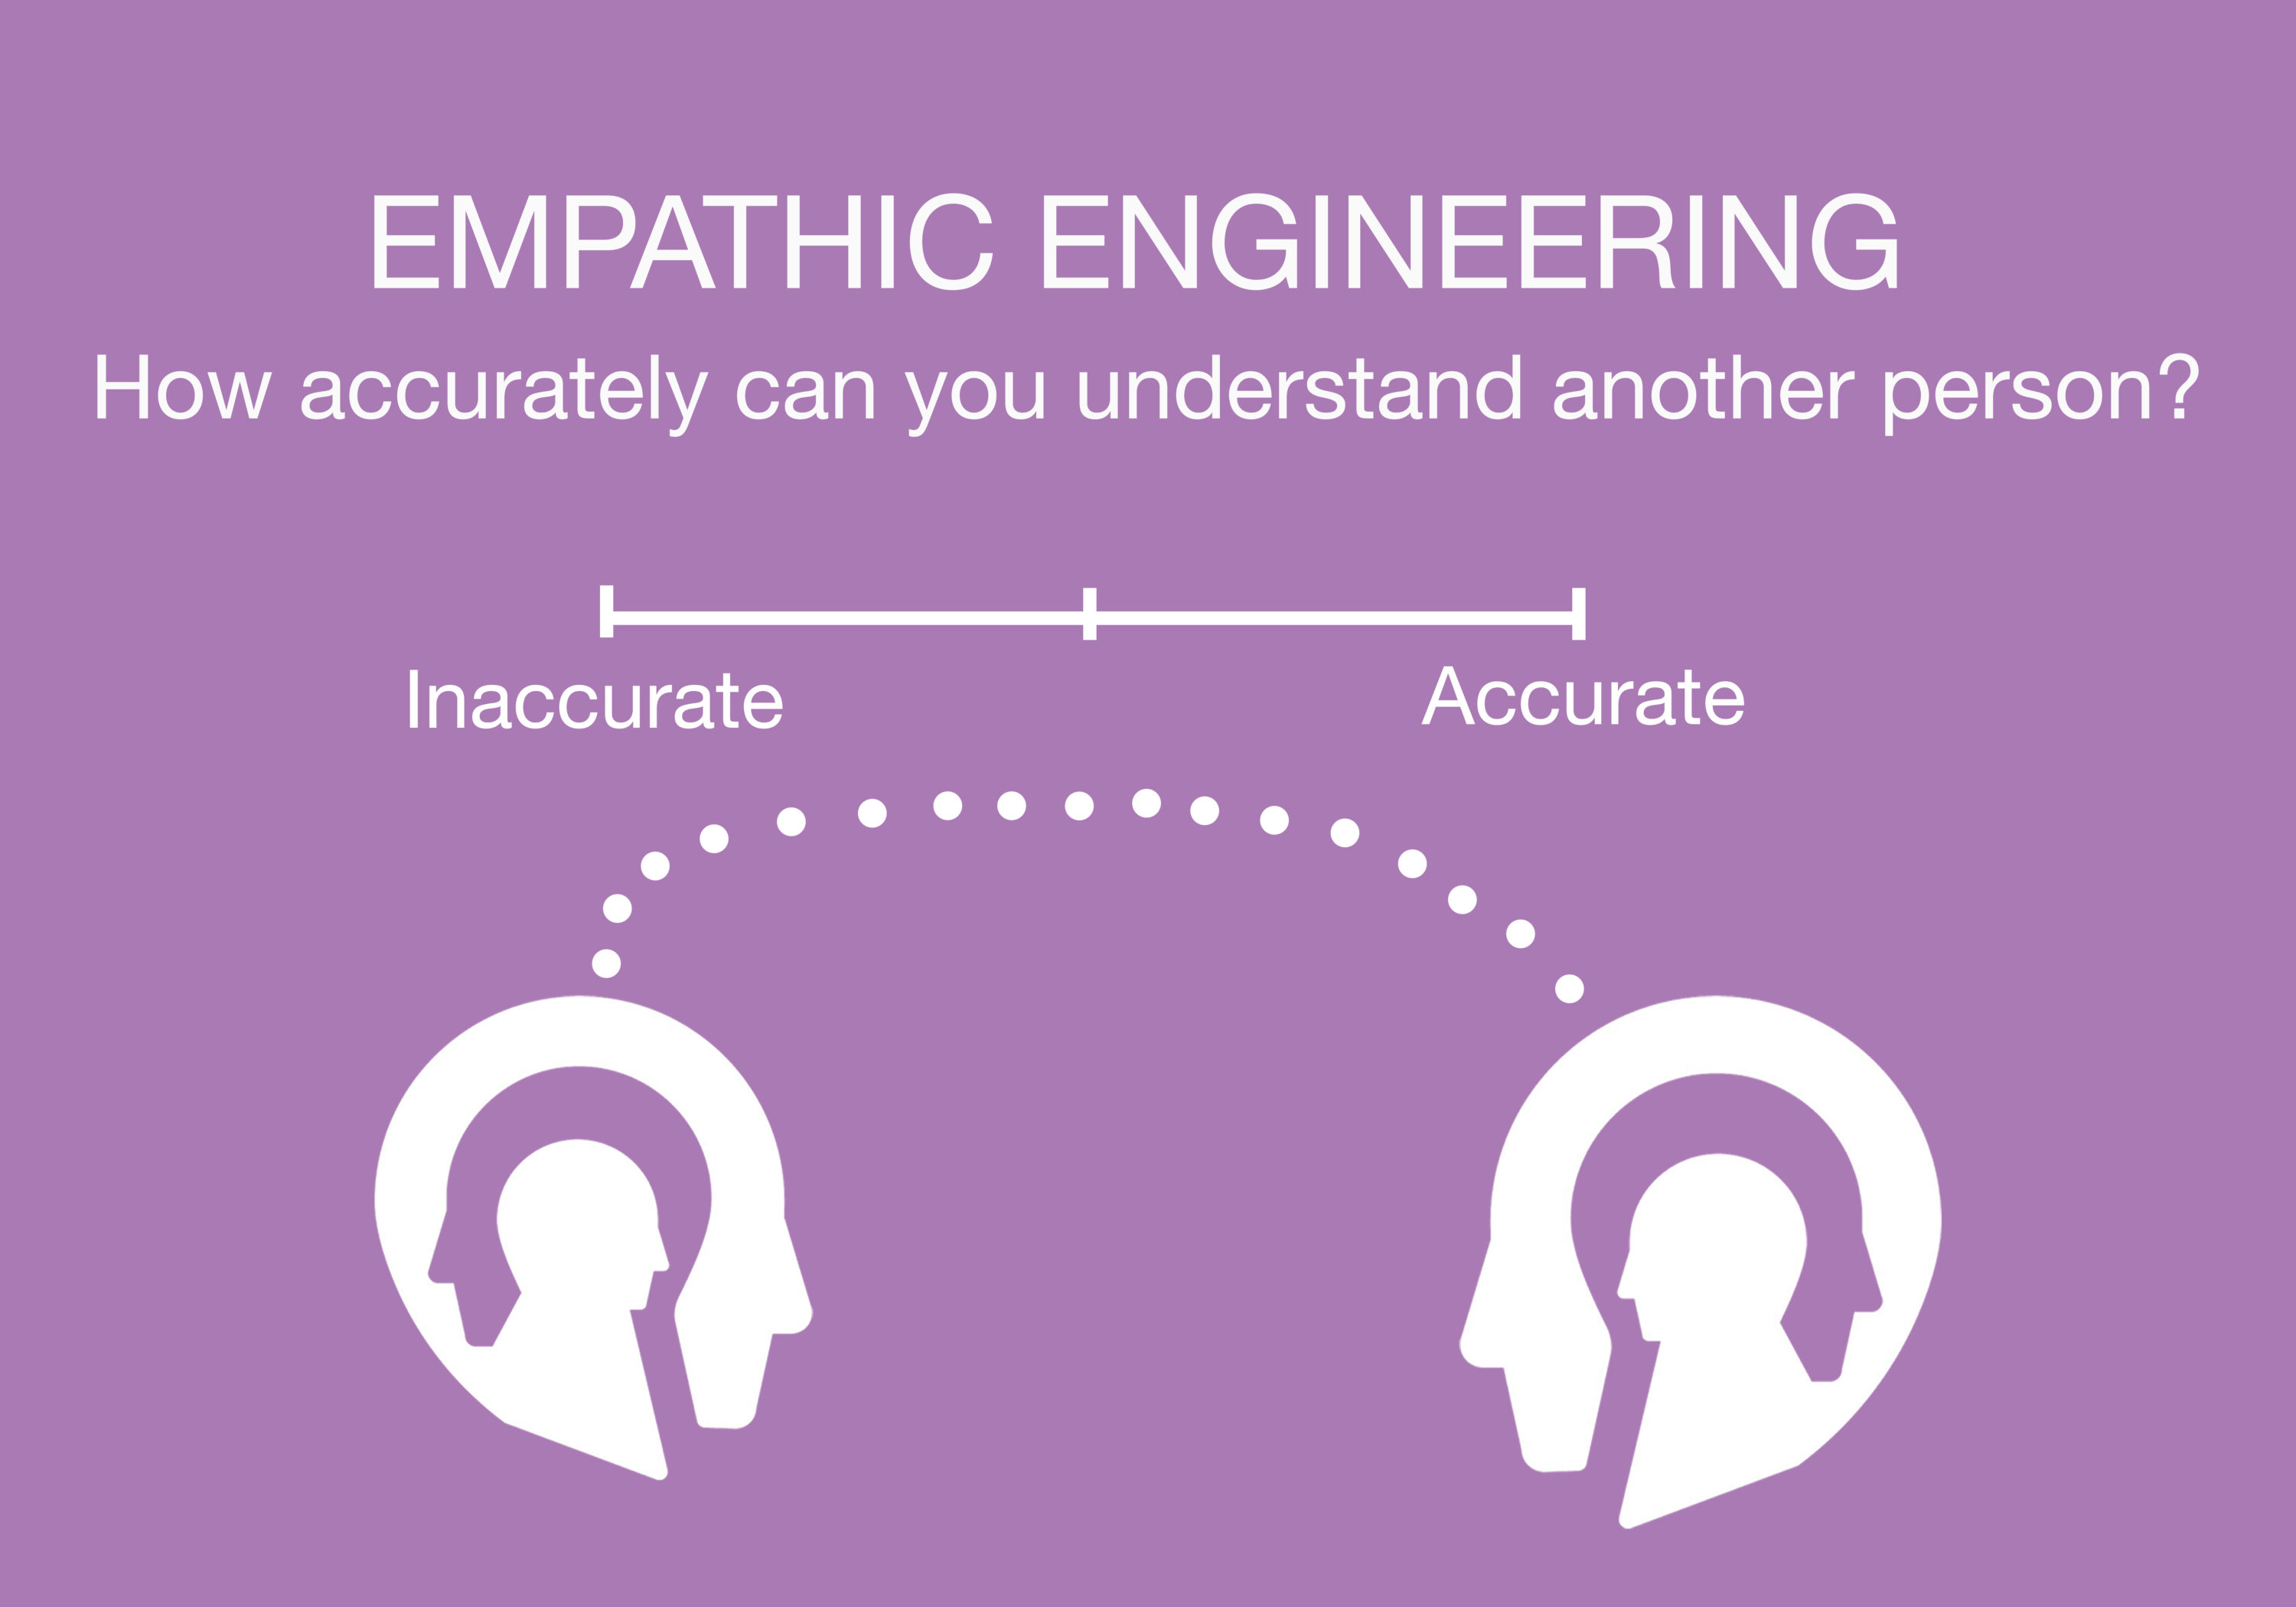 Empathic-engineering-blog-QEA-Update-scaled.jpg